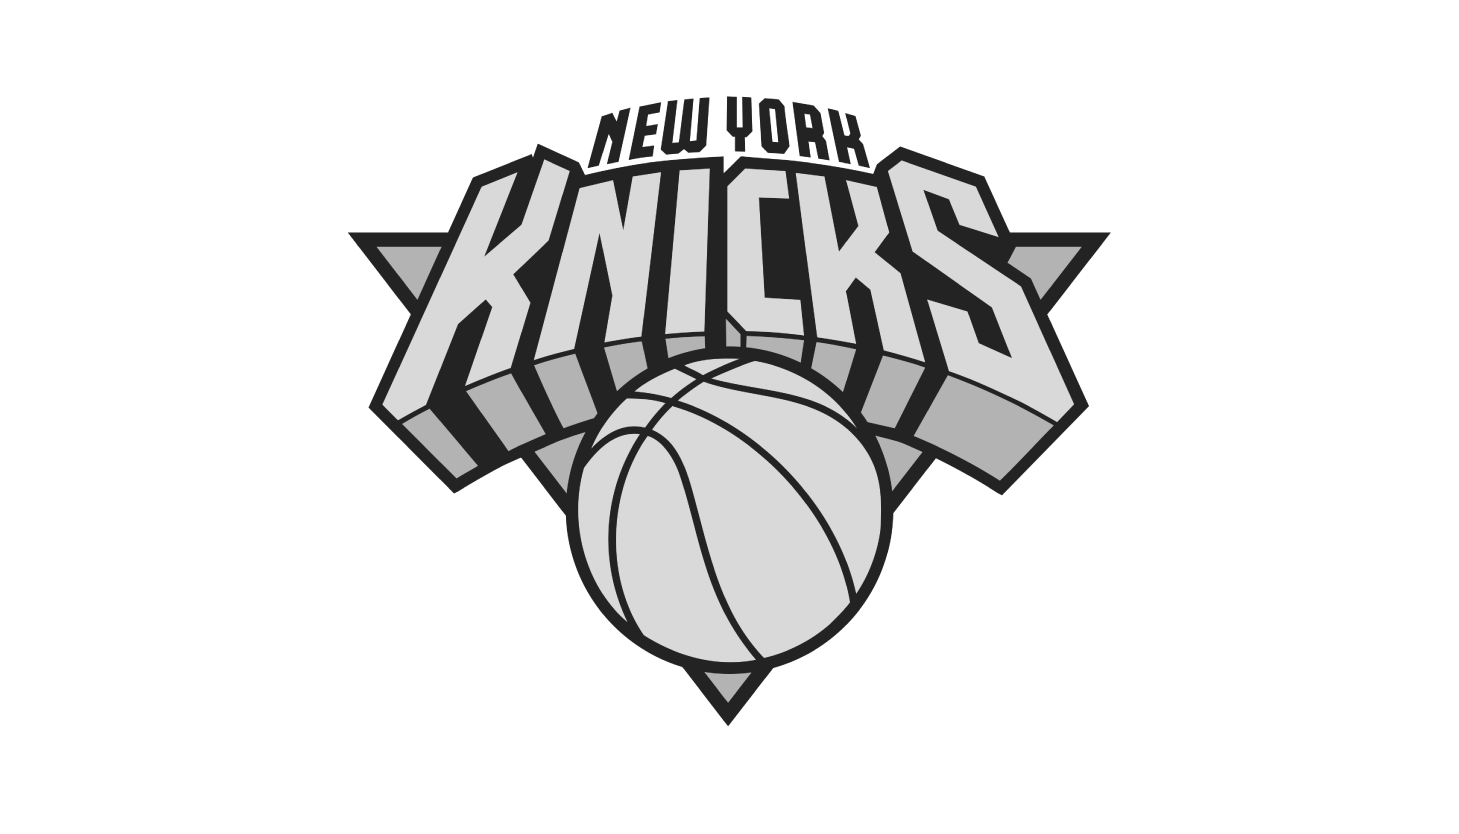 Website Logos_Knicks (1).png